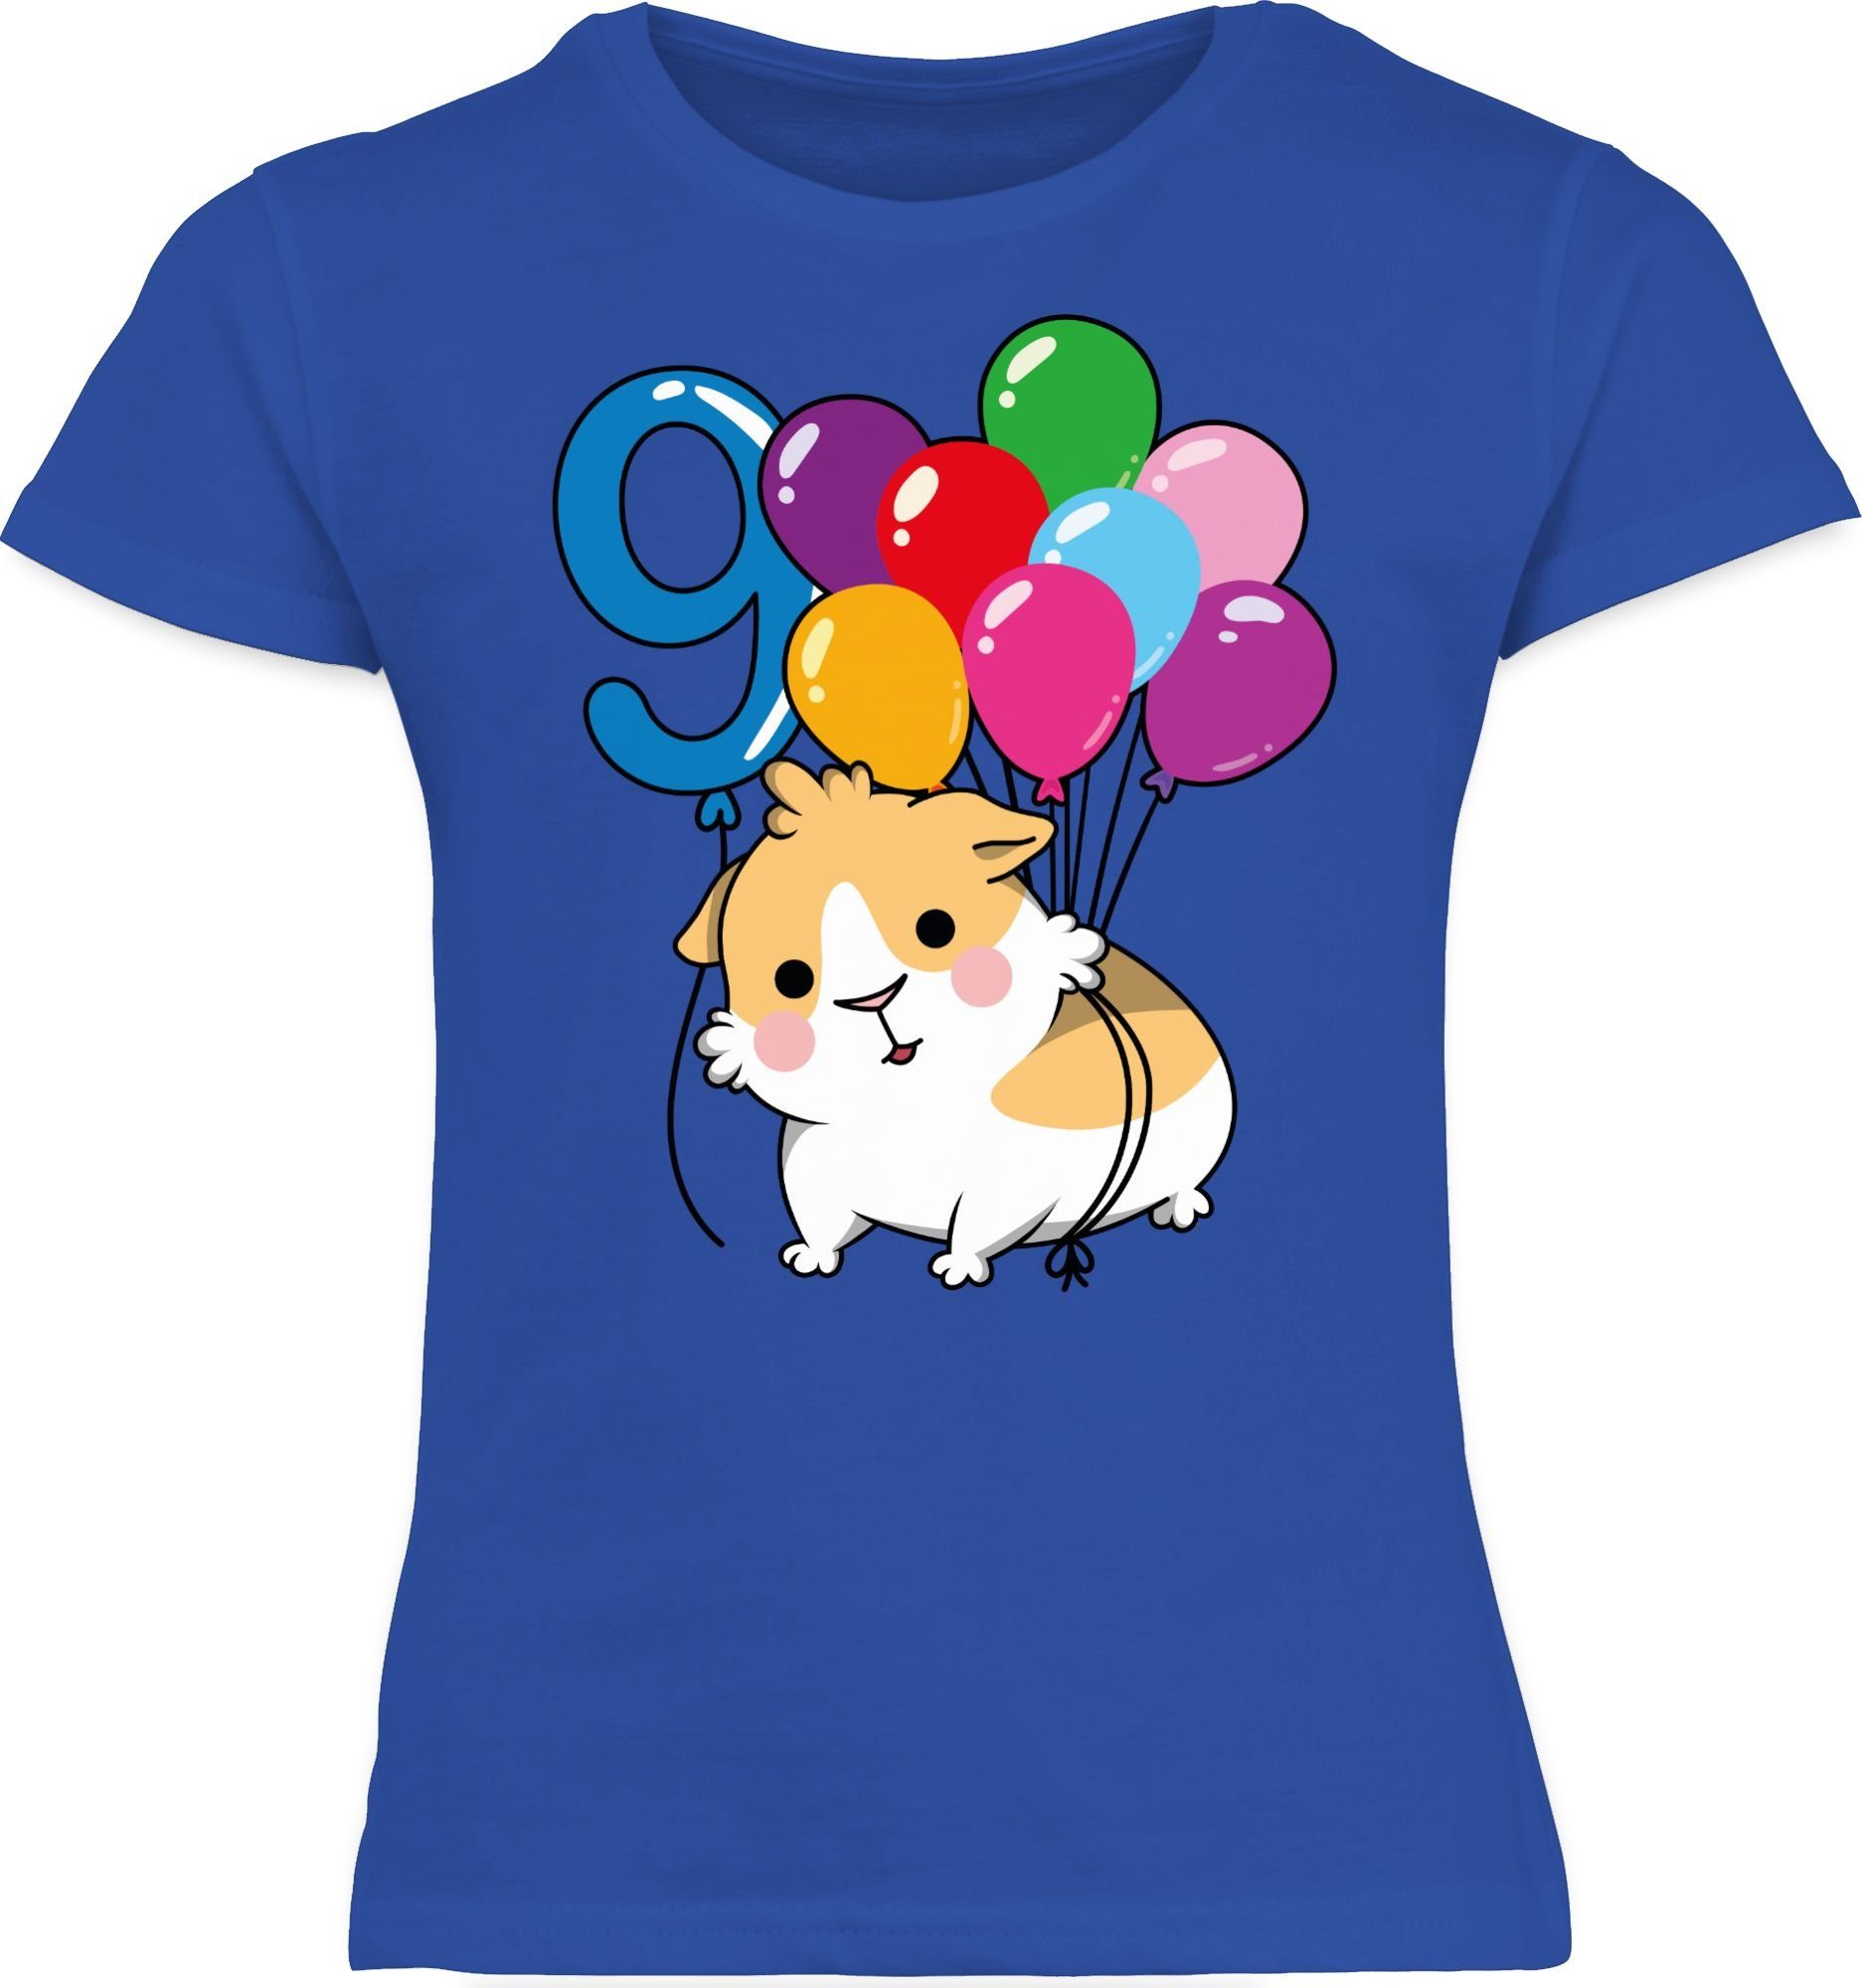 Neun 9. Meerschweinchen Geburtstag 3 Shirtracer T-Shirt Royalblau